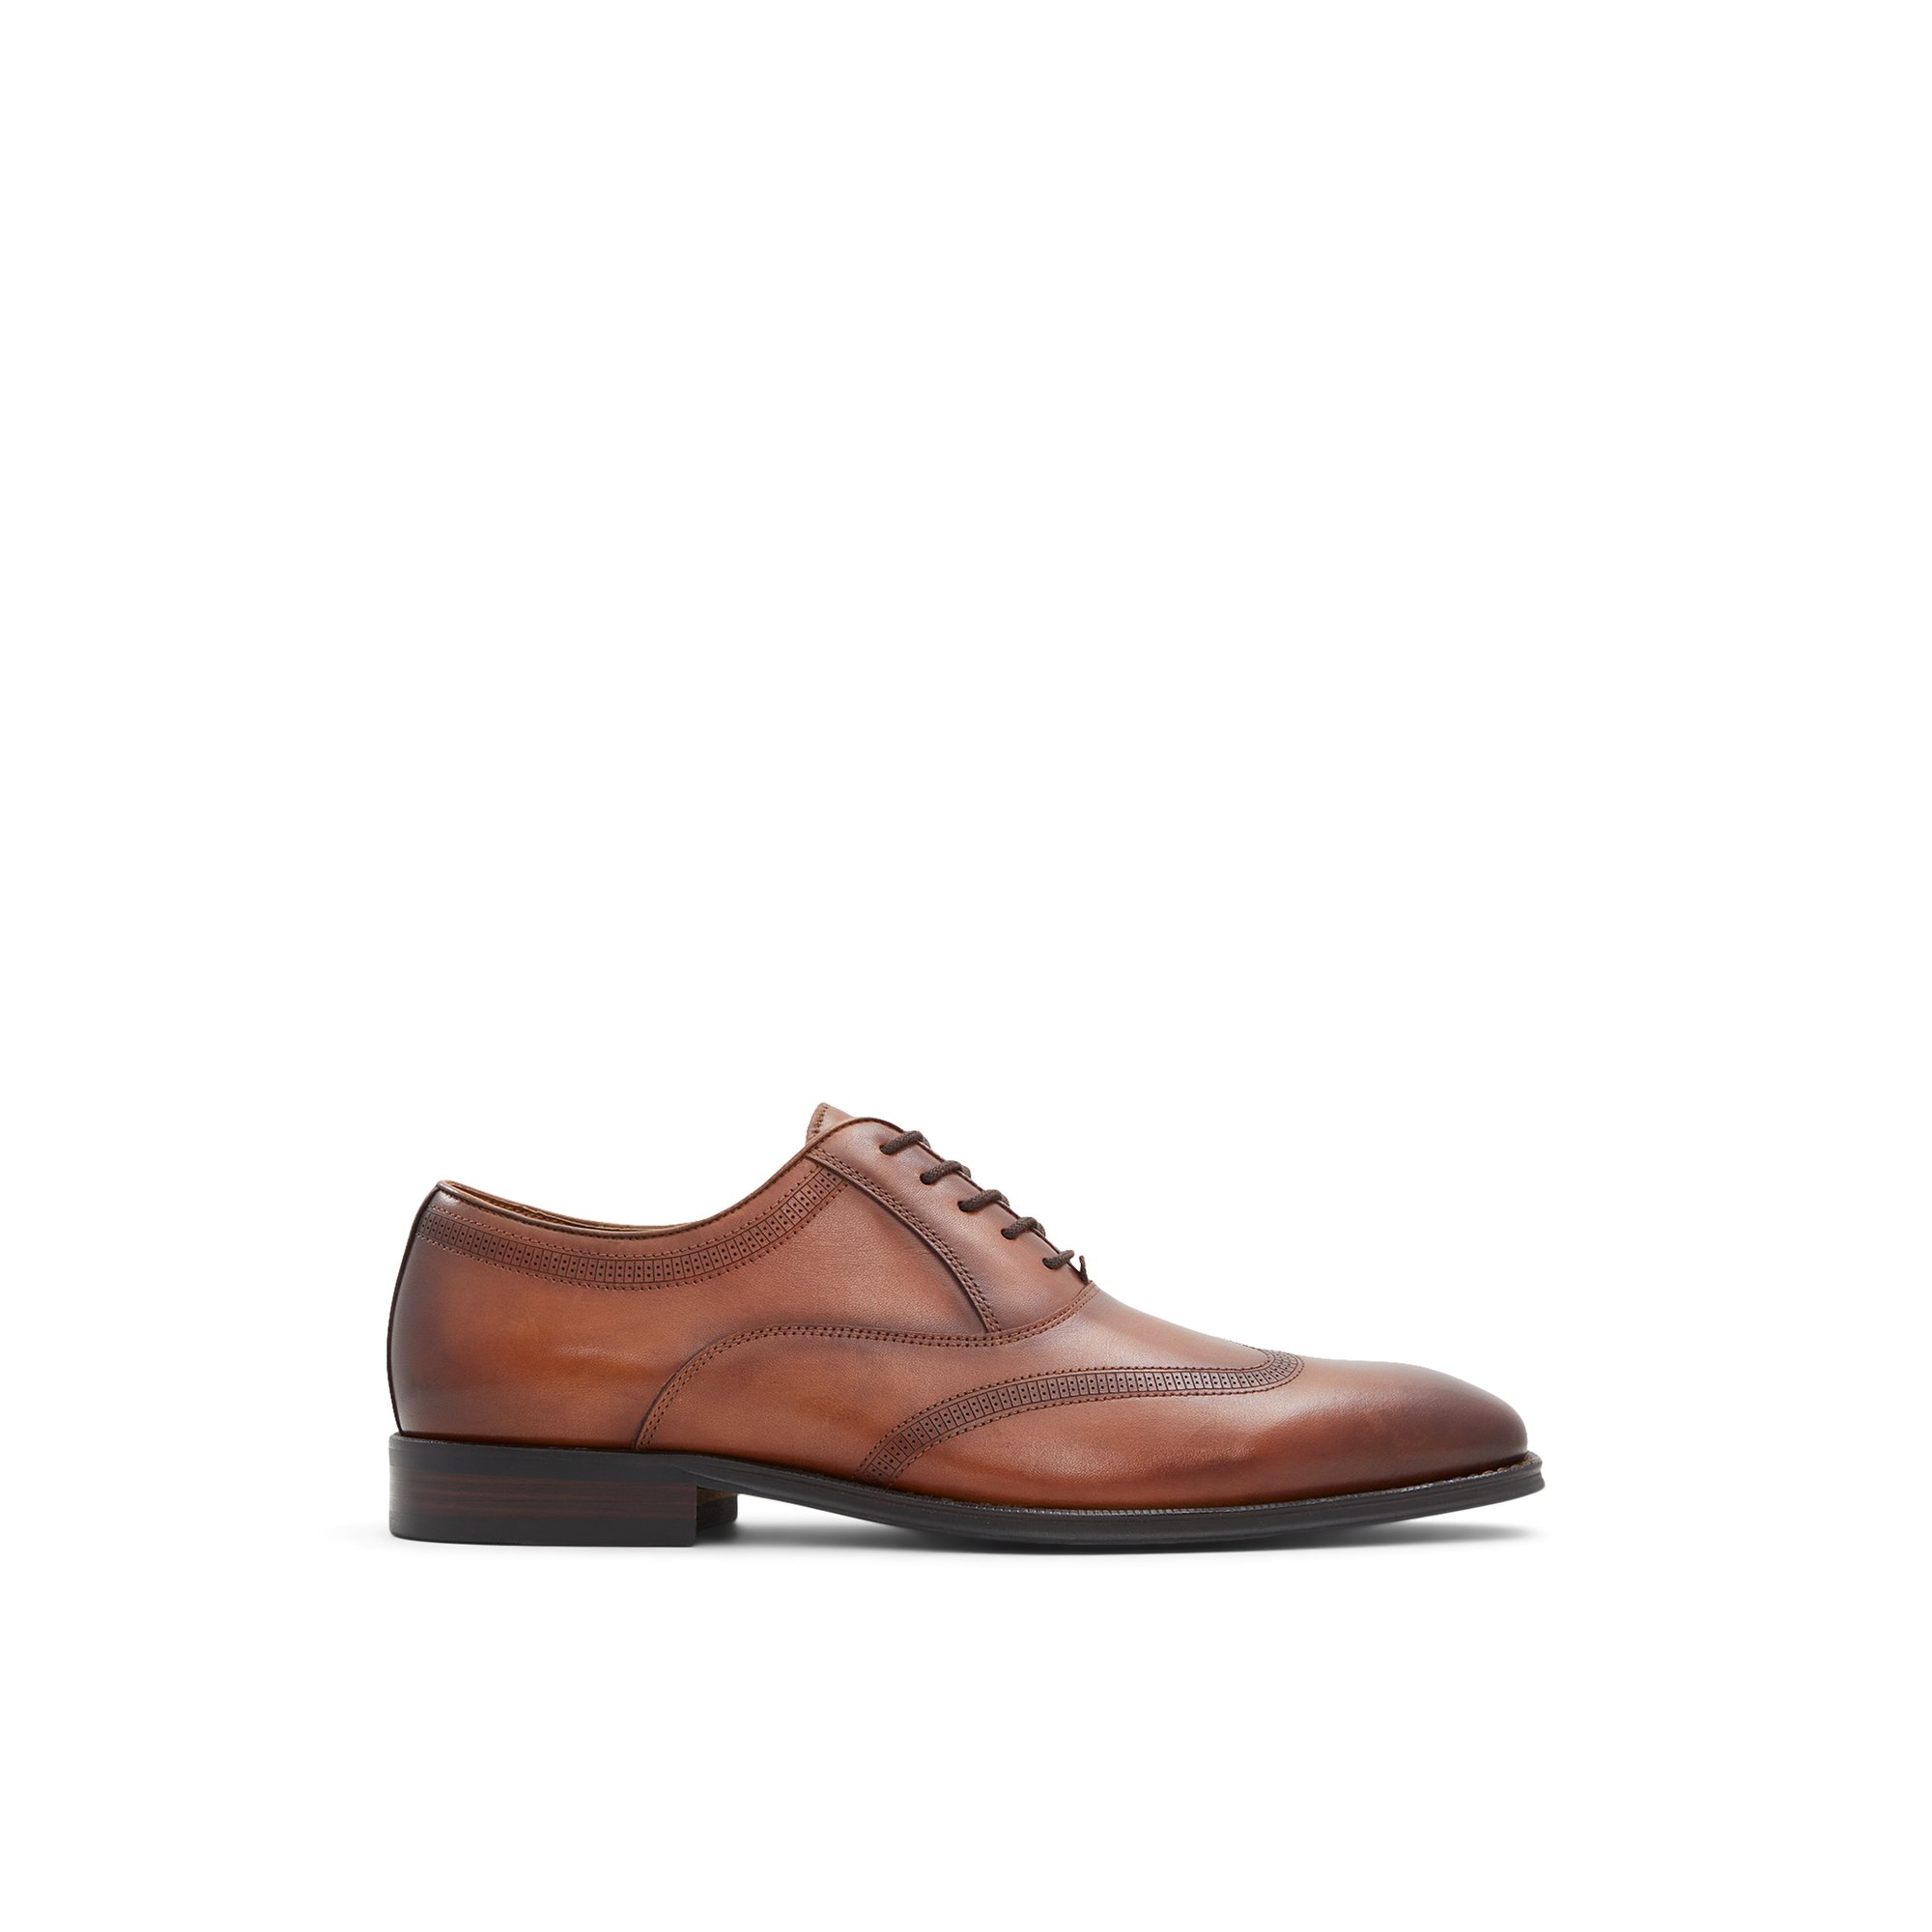 ALDO Stoic - Men's Dress Shoes - Brown